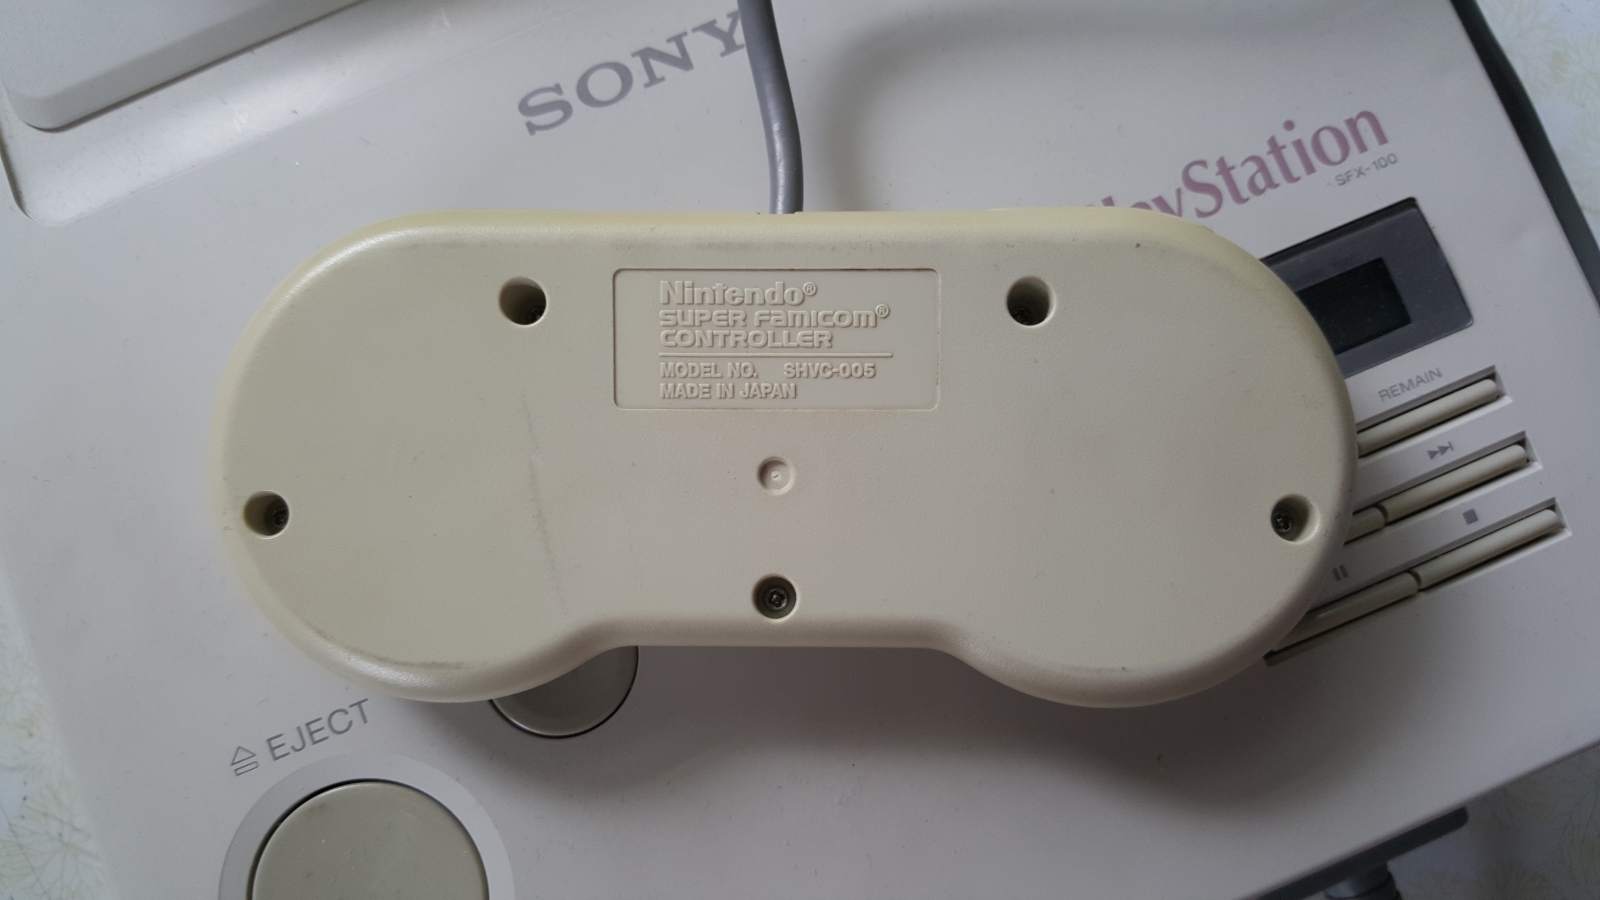 [Games] Encontrado protótipo abandonado do Nintendo/Playstation Sony-nintendo-playstation